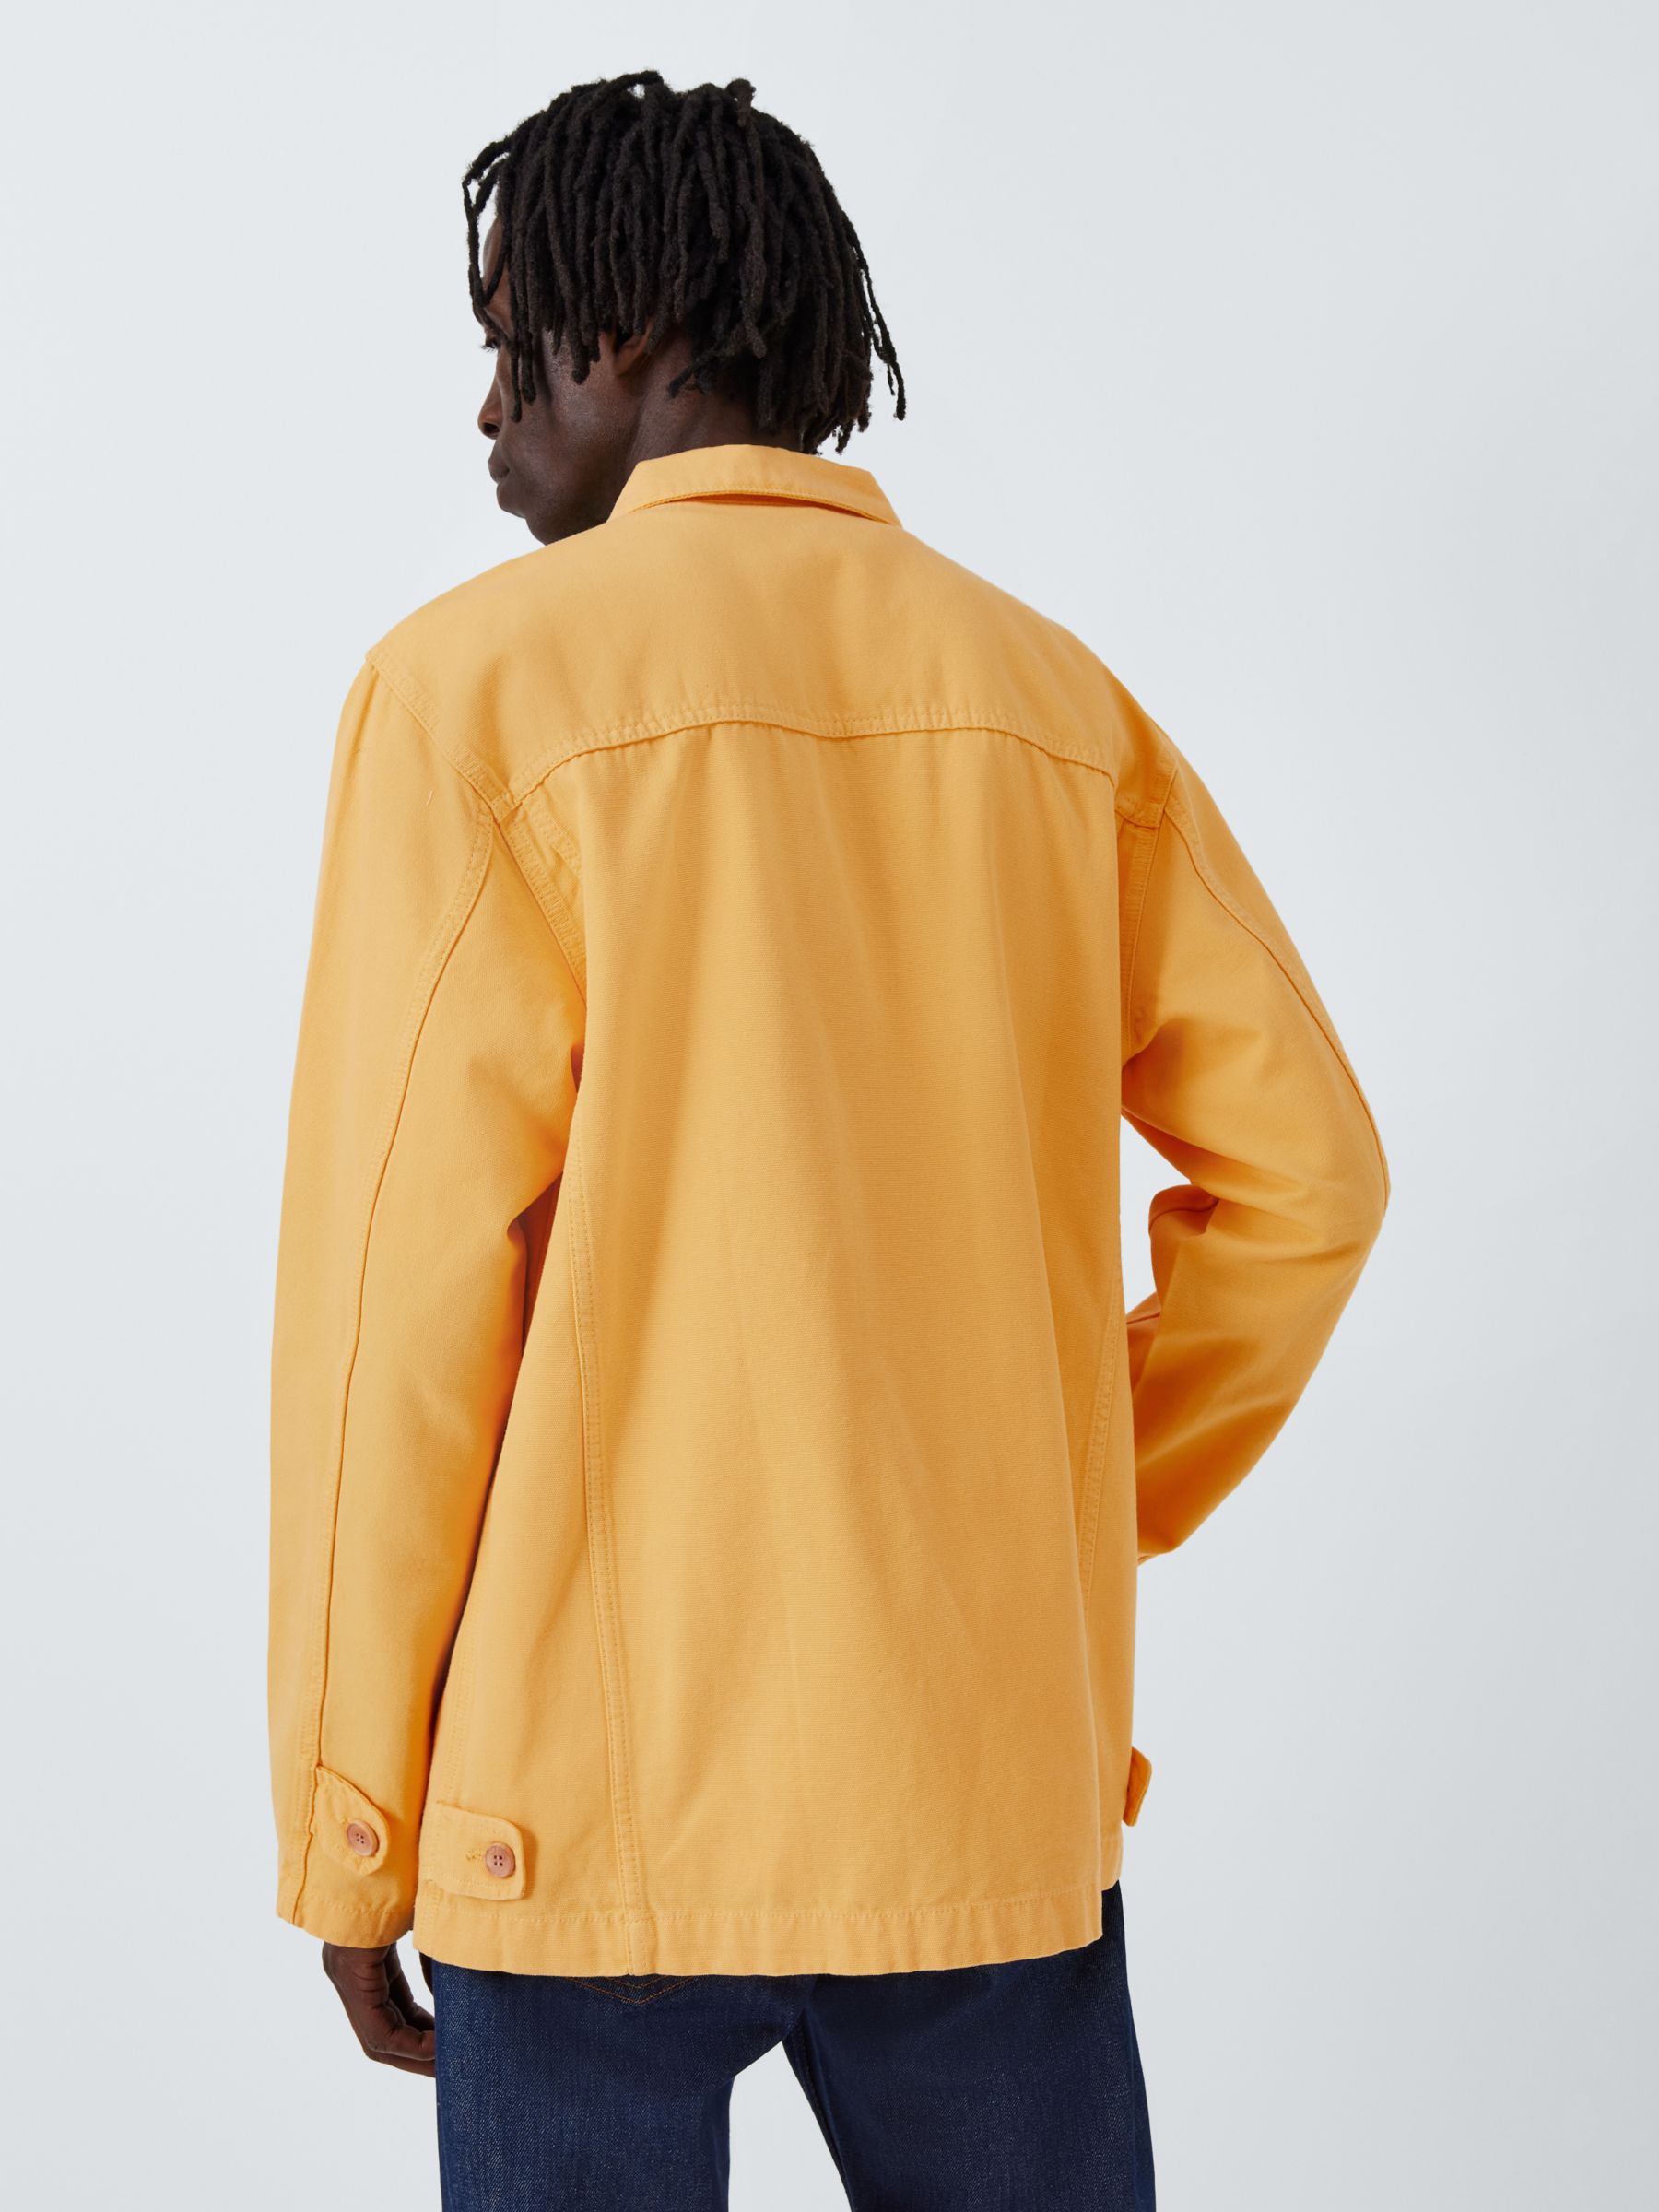 Armor Lux Cotton Fisherman Jacket, Yellow, L